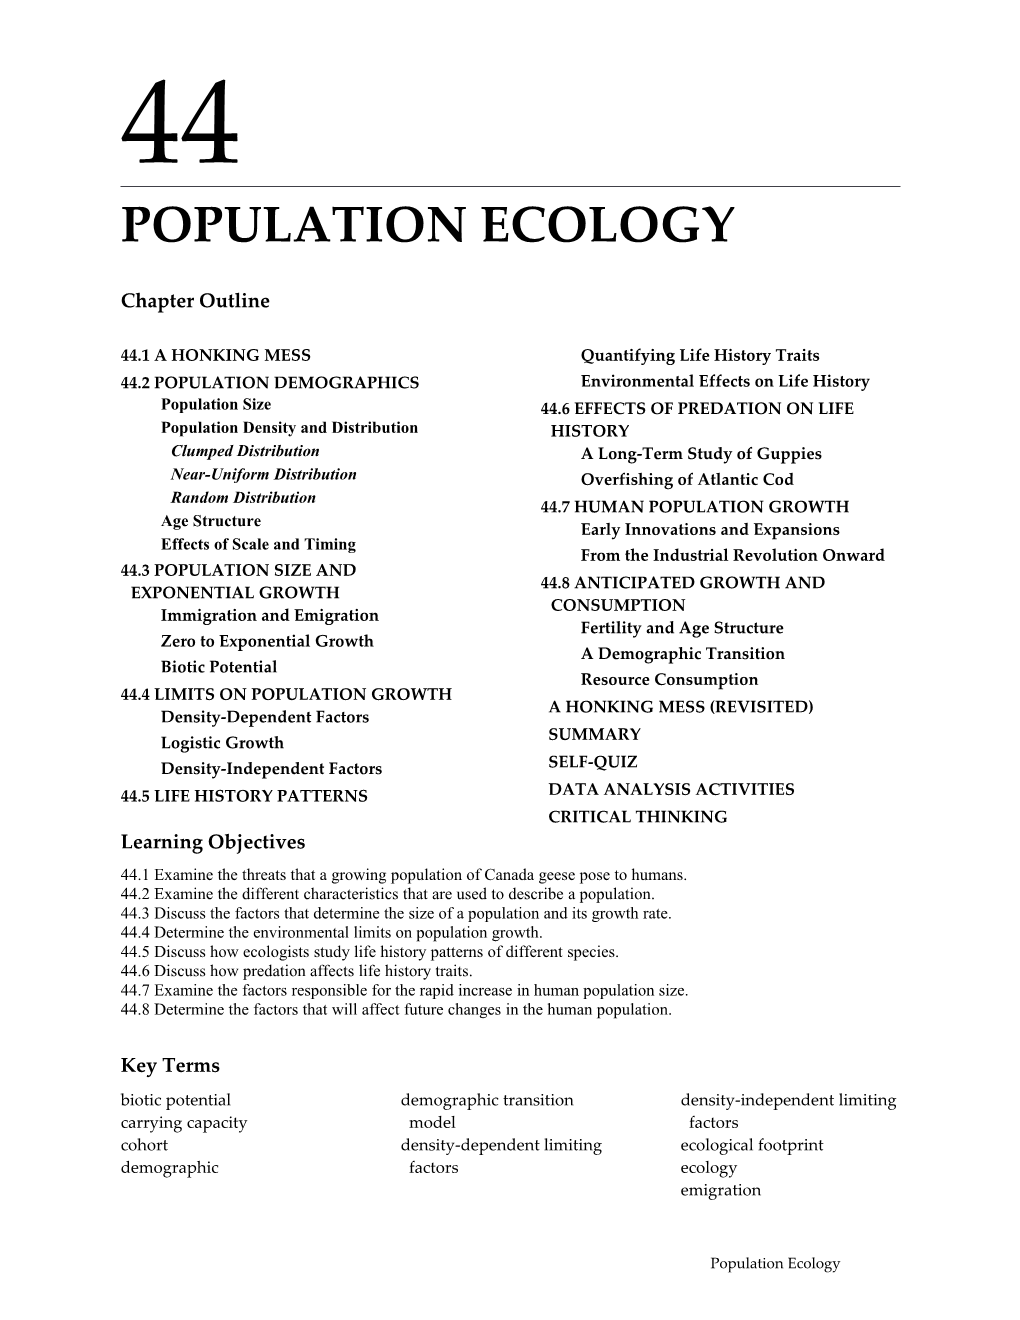 Population Ecology s1